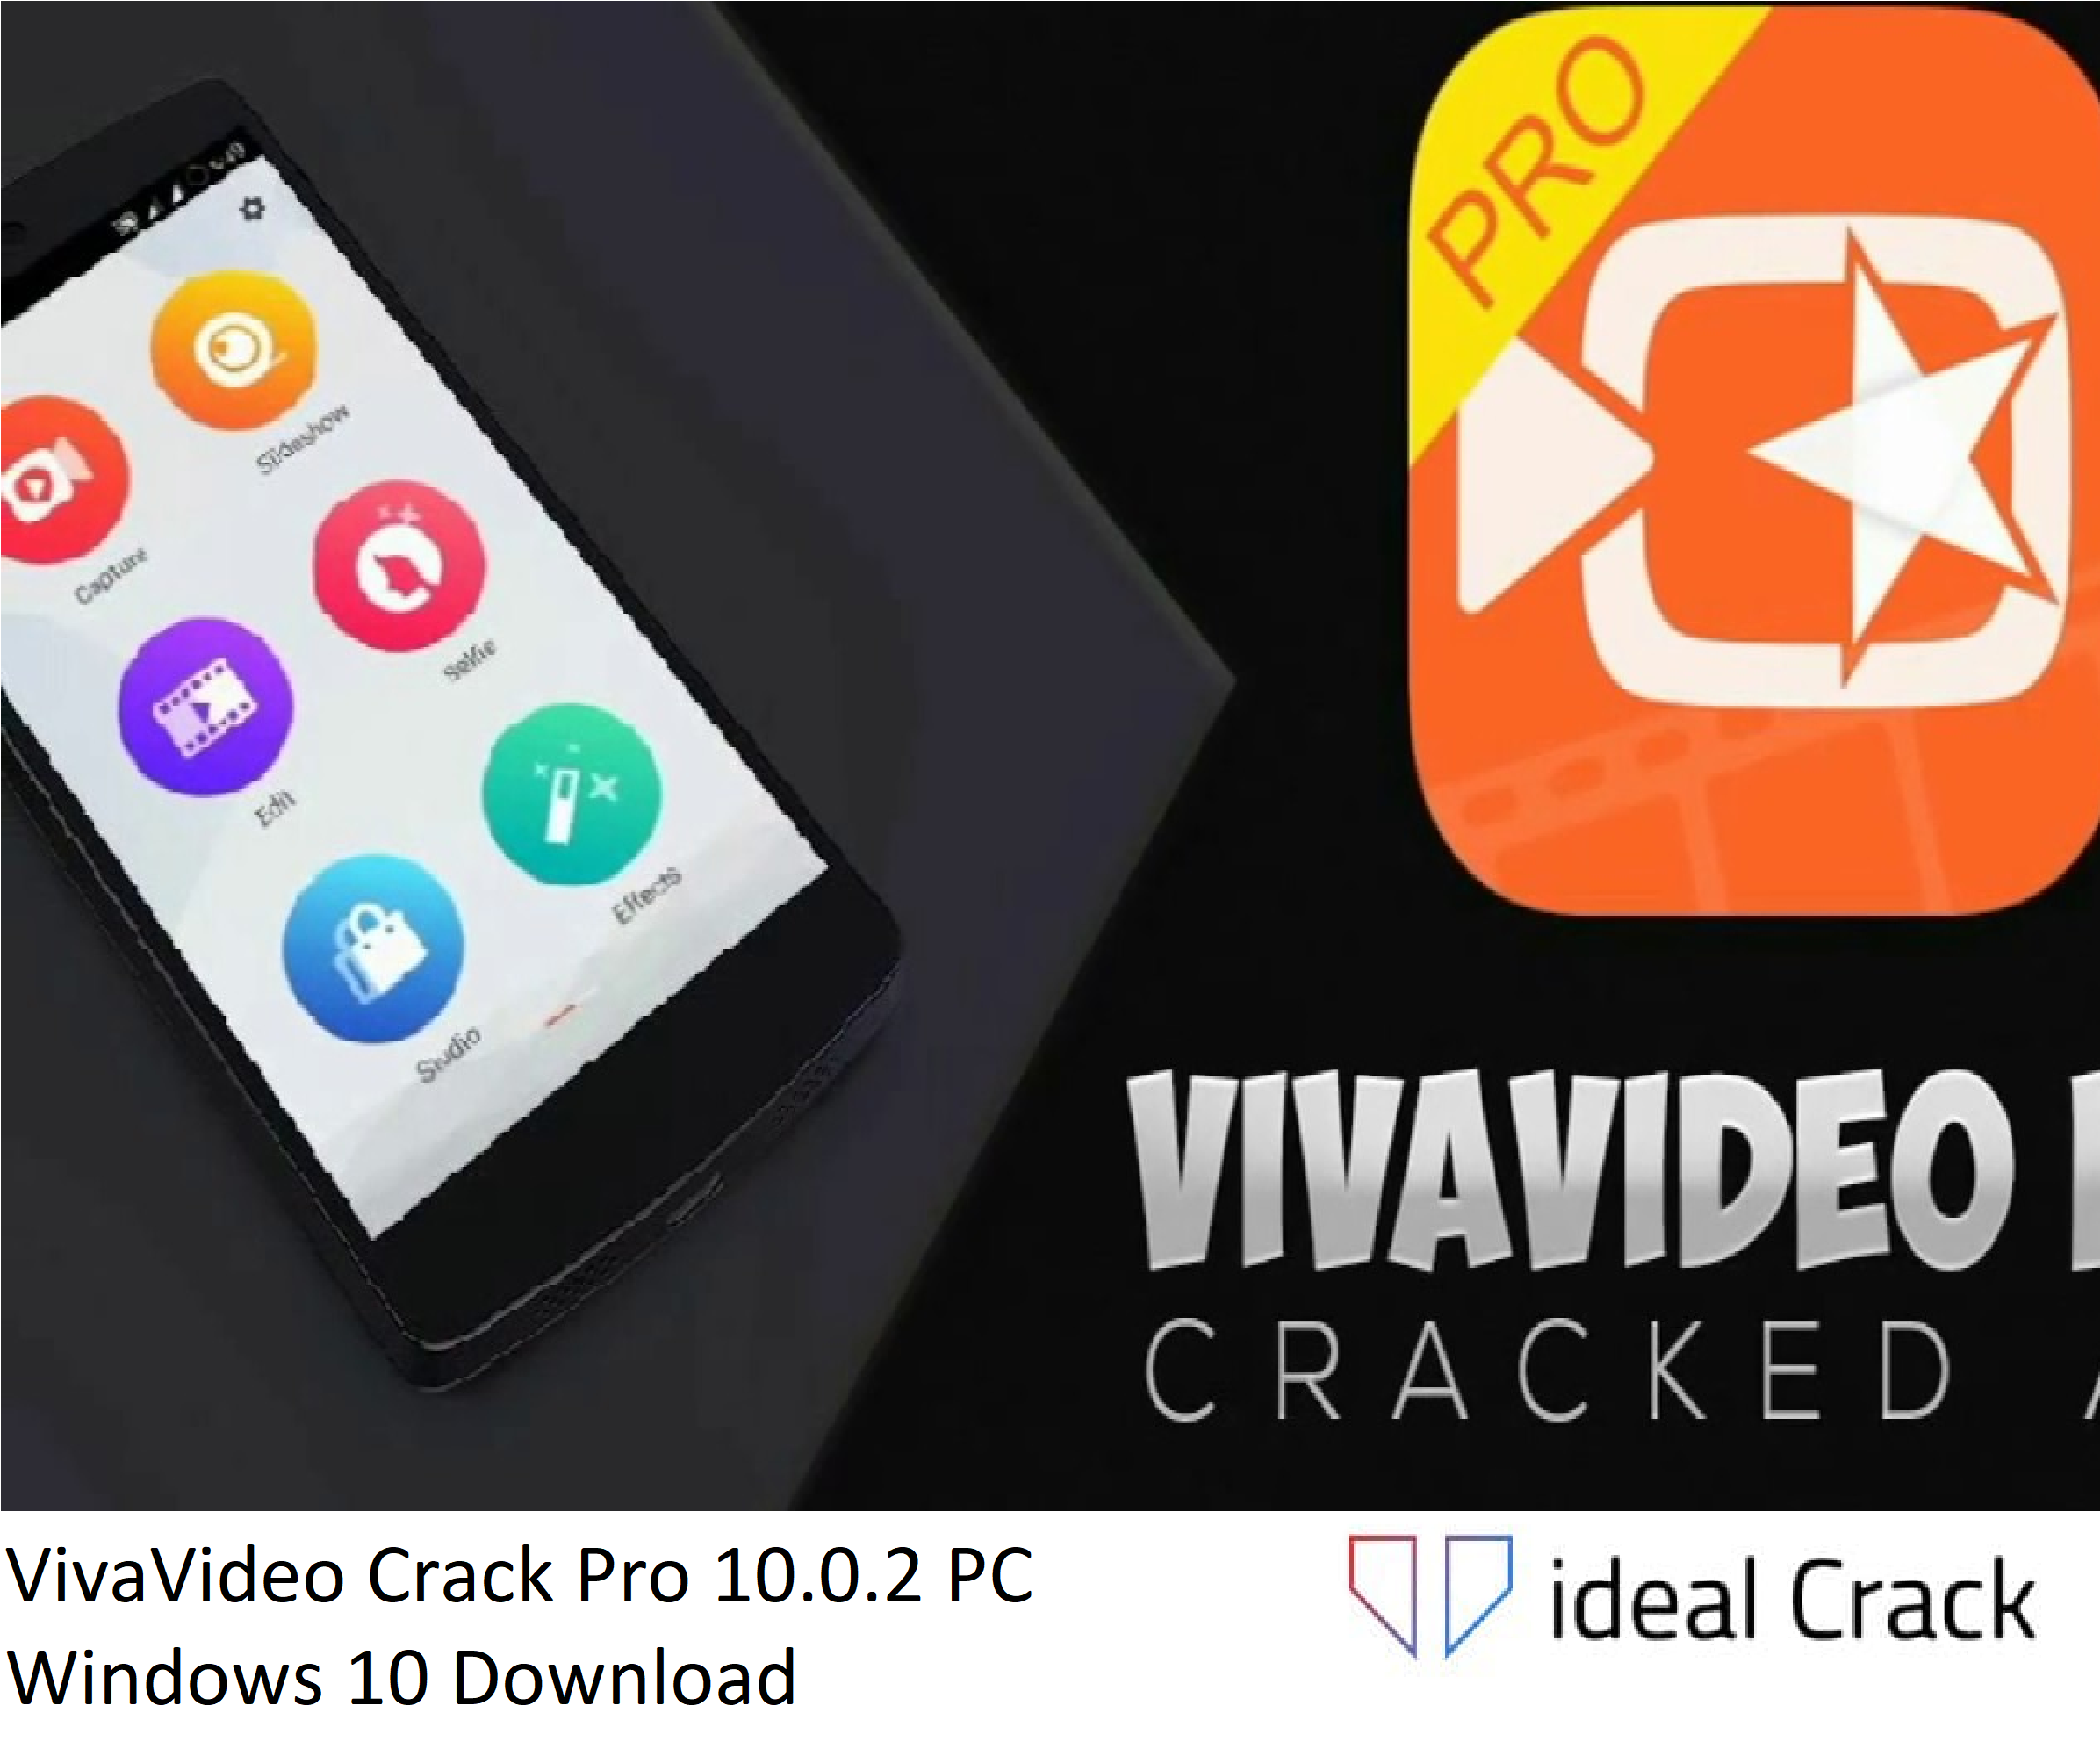 VivaVideo Crack Pro 10.0.2 PC Windows 10 Download